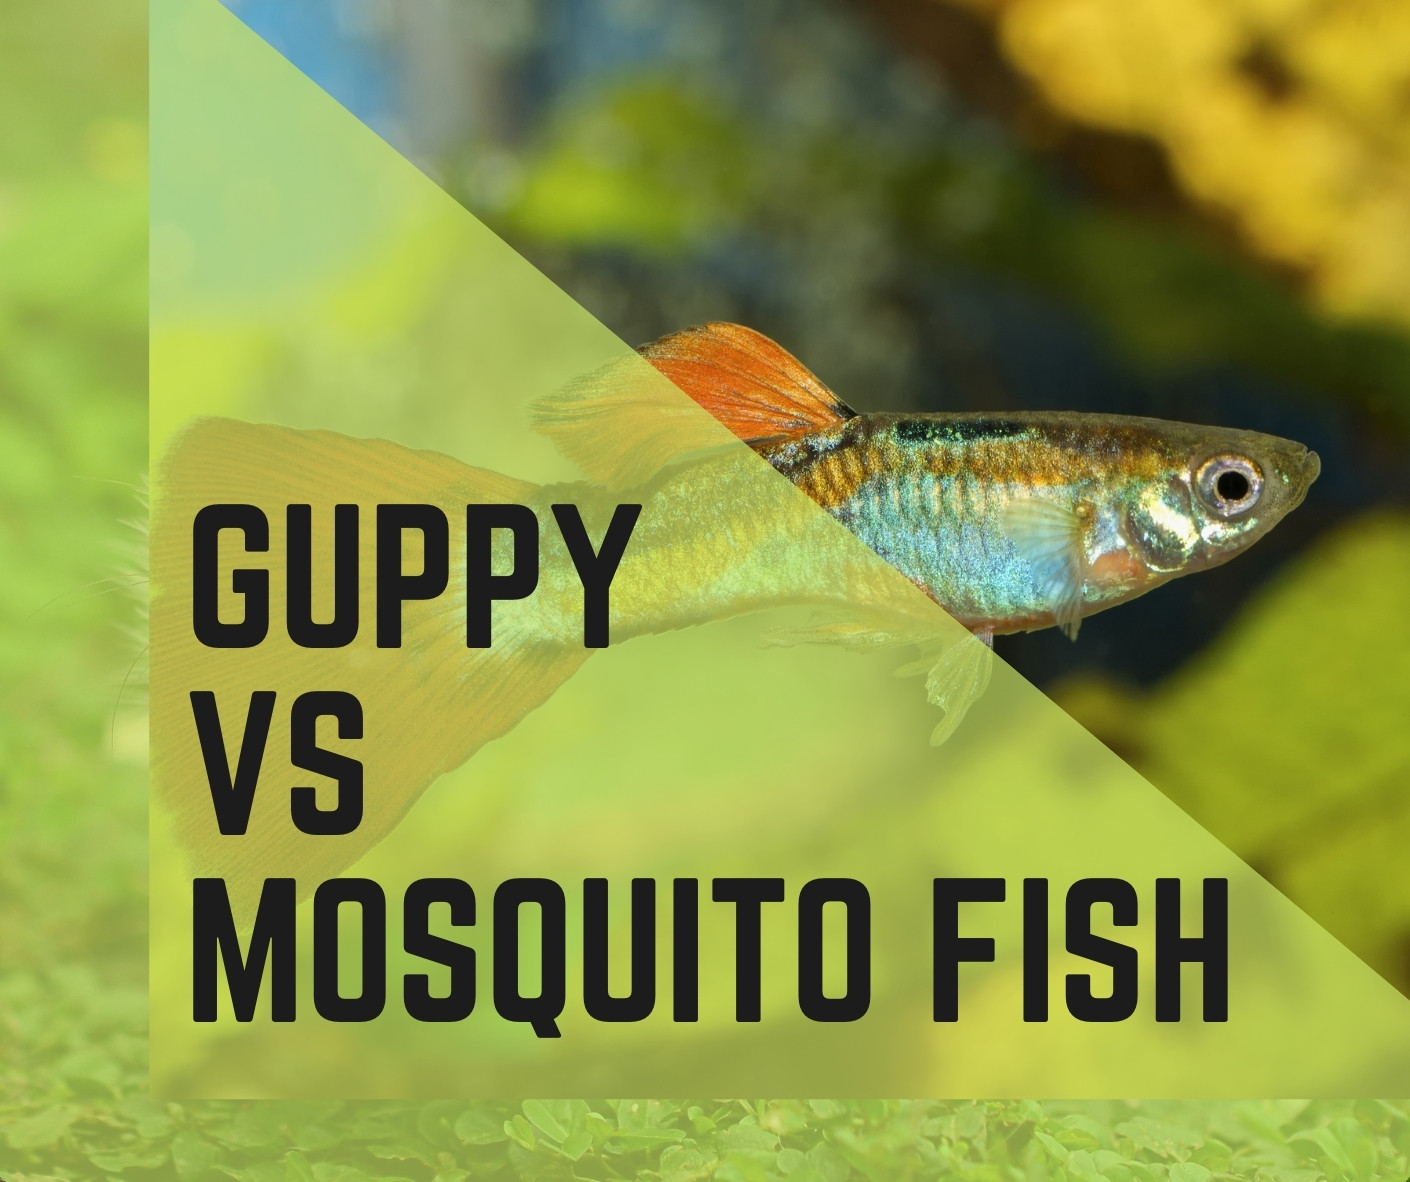 Mosquito Fish vs Guppy Fish